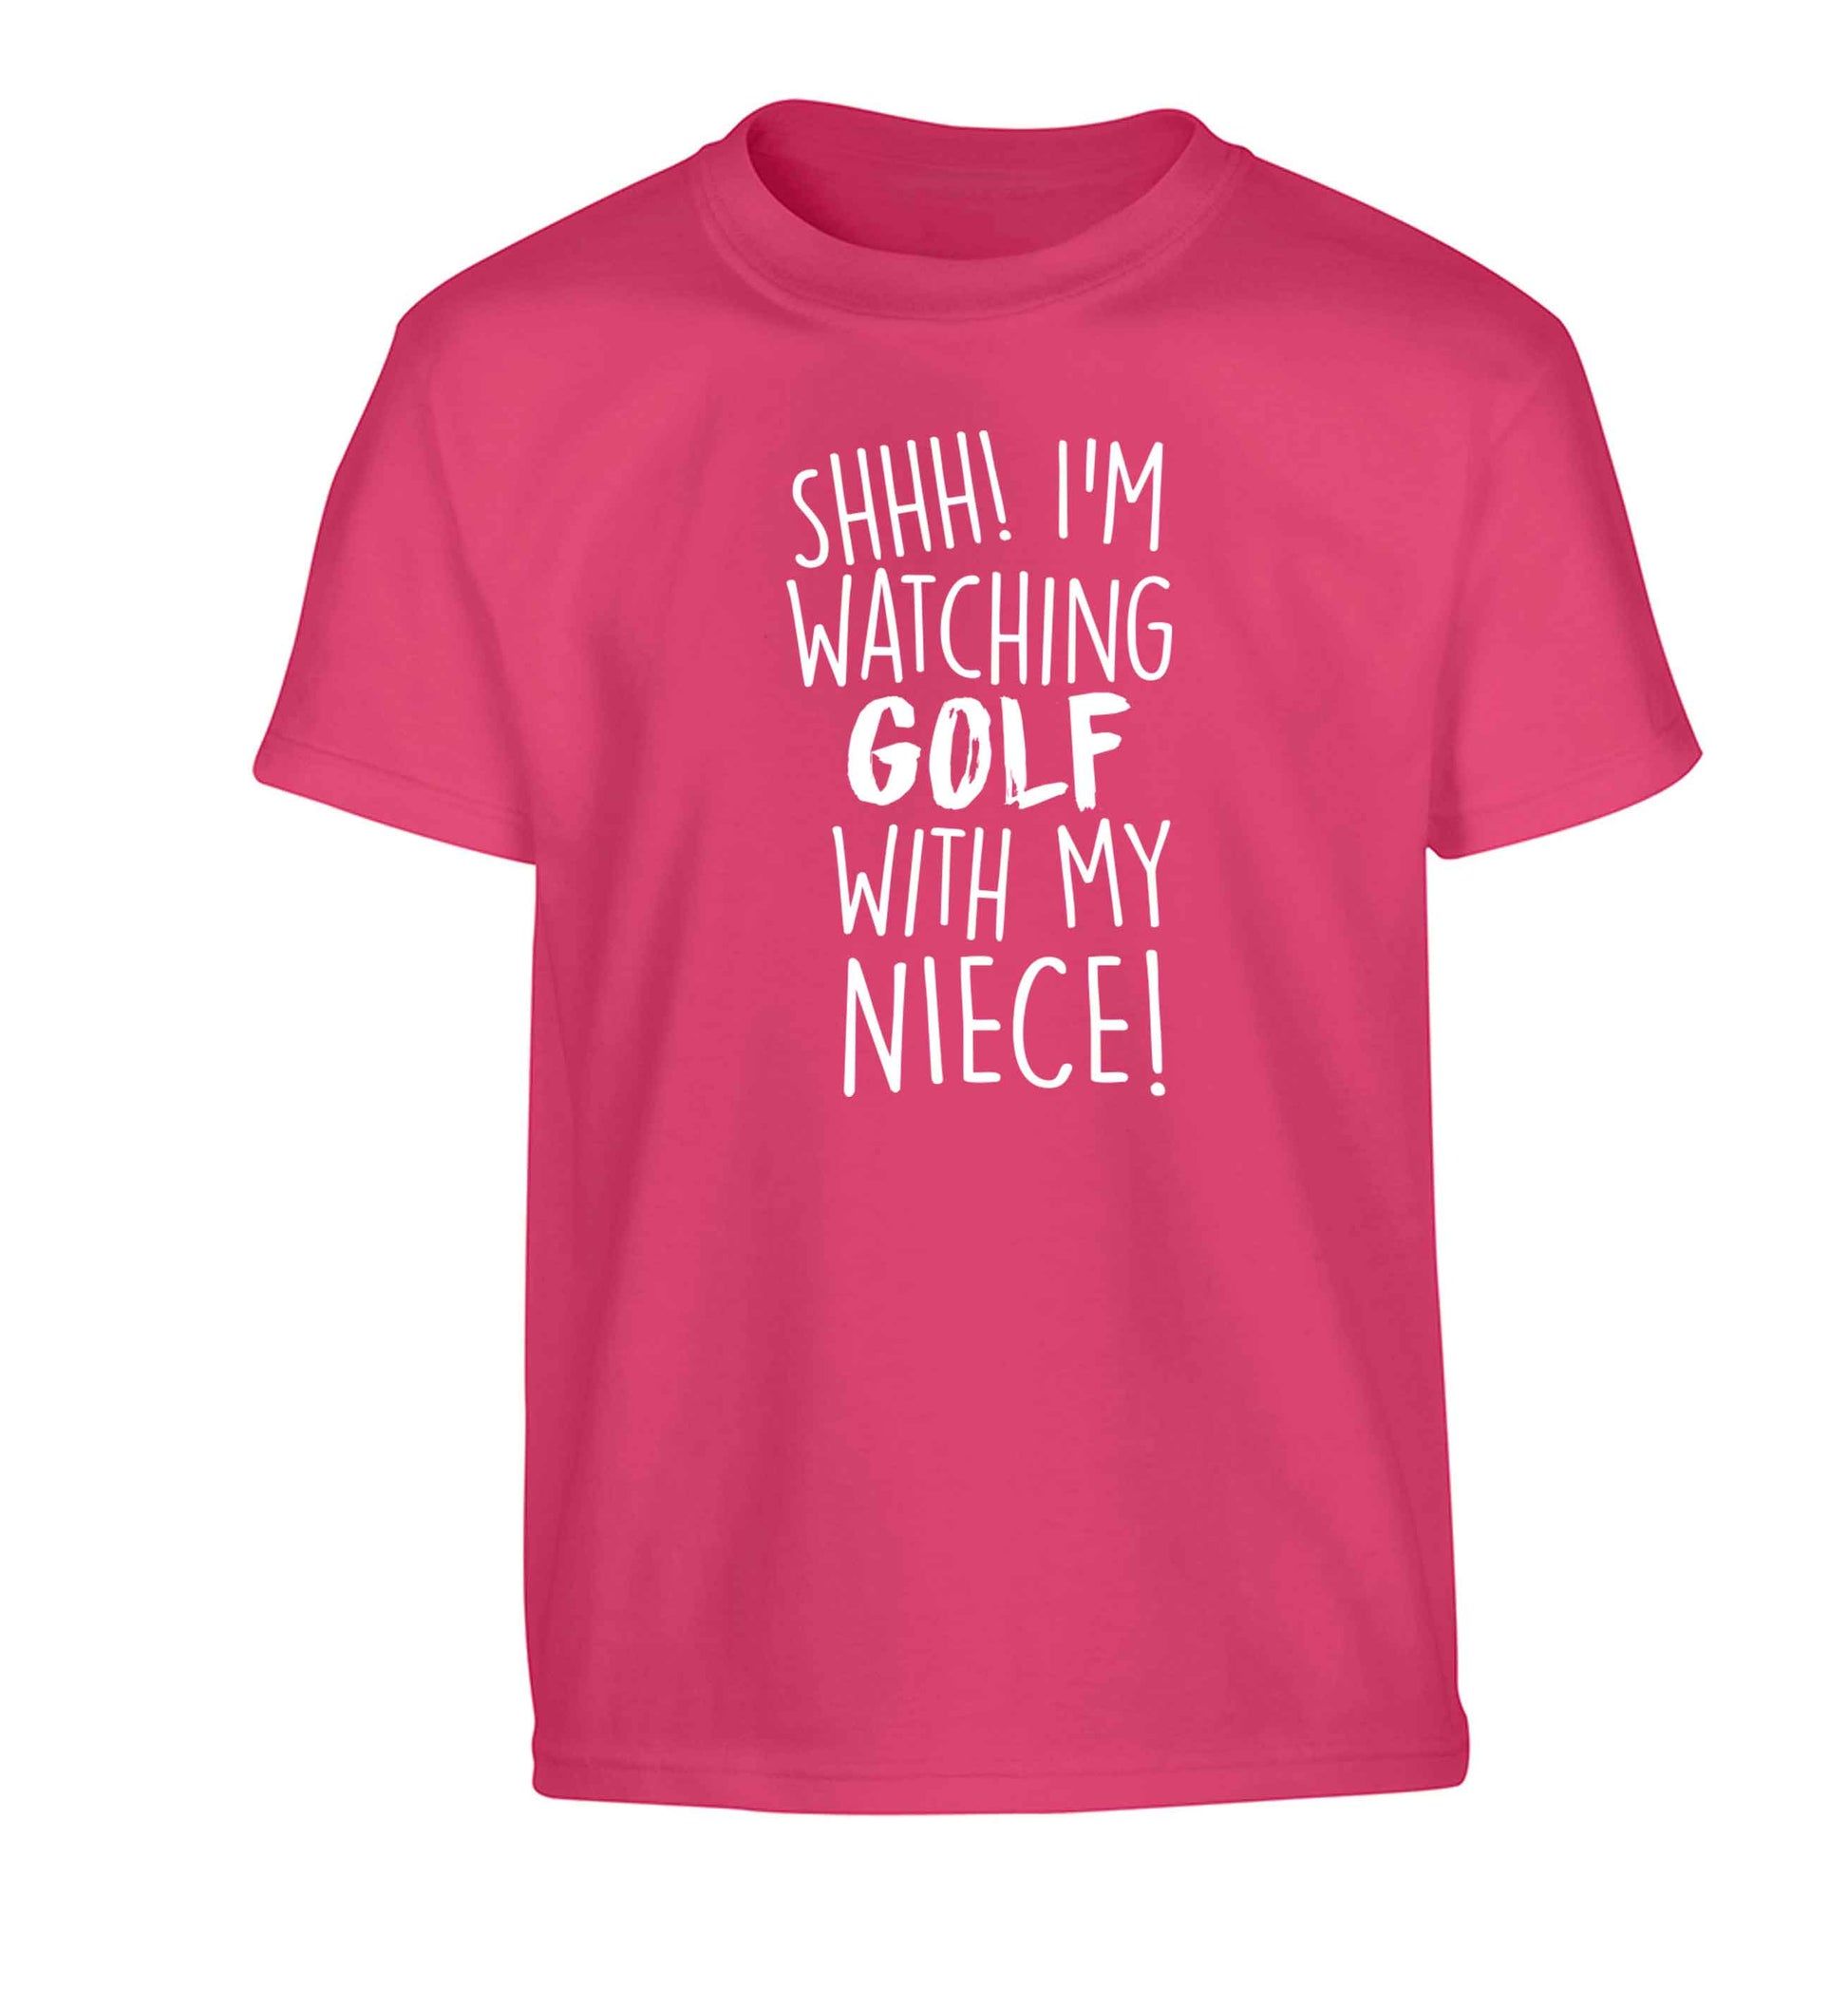 Shh I'm watching golf with my niece Children's pink Tshirt 12-13 Years